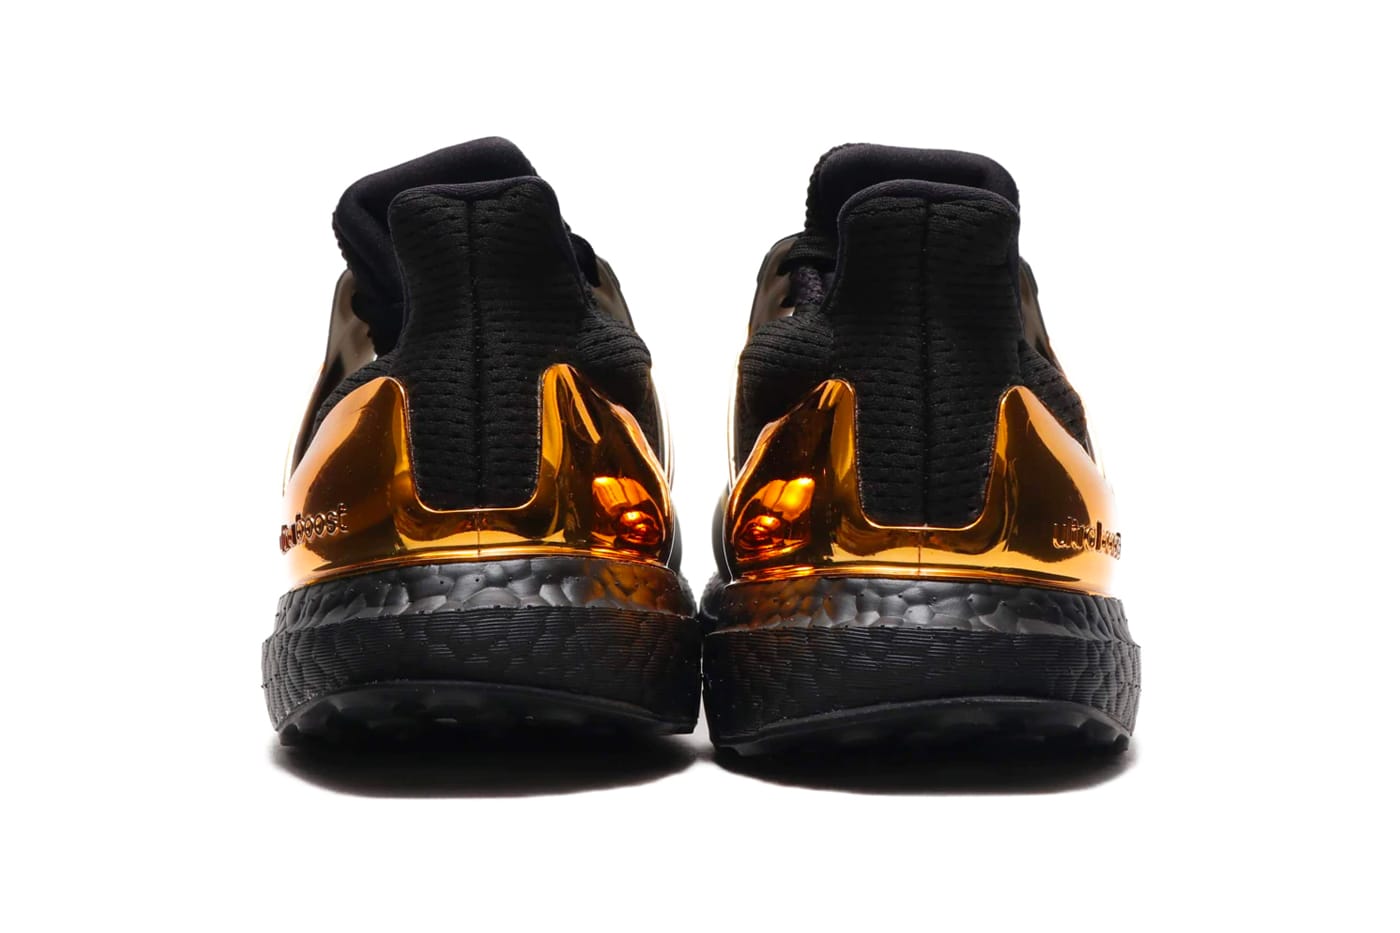 adidas ultra boost black gold eg8102